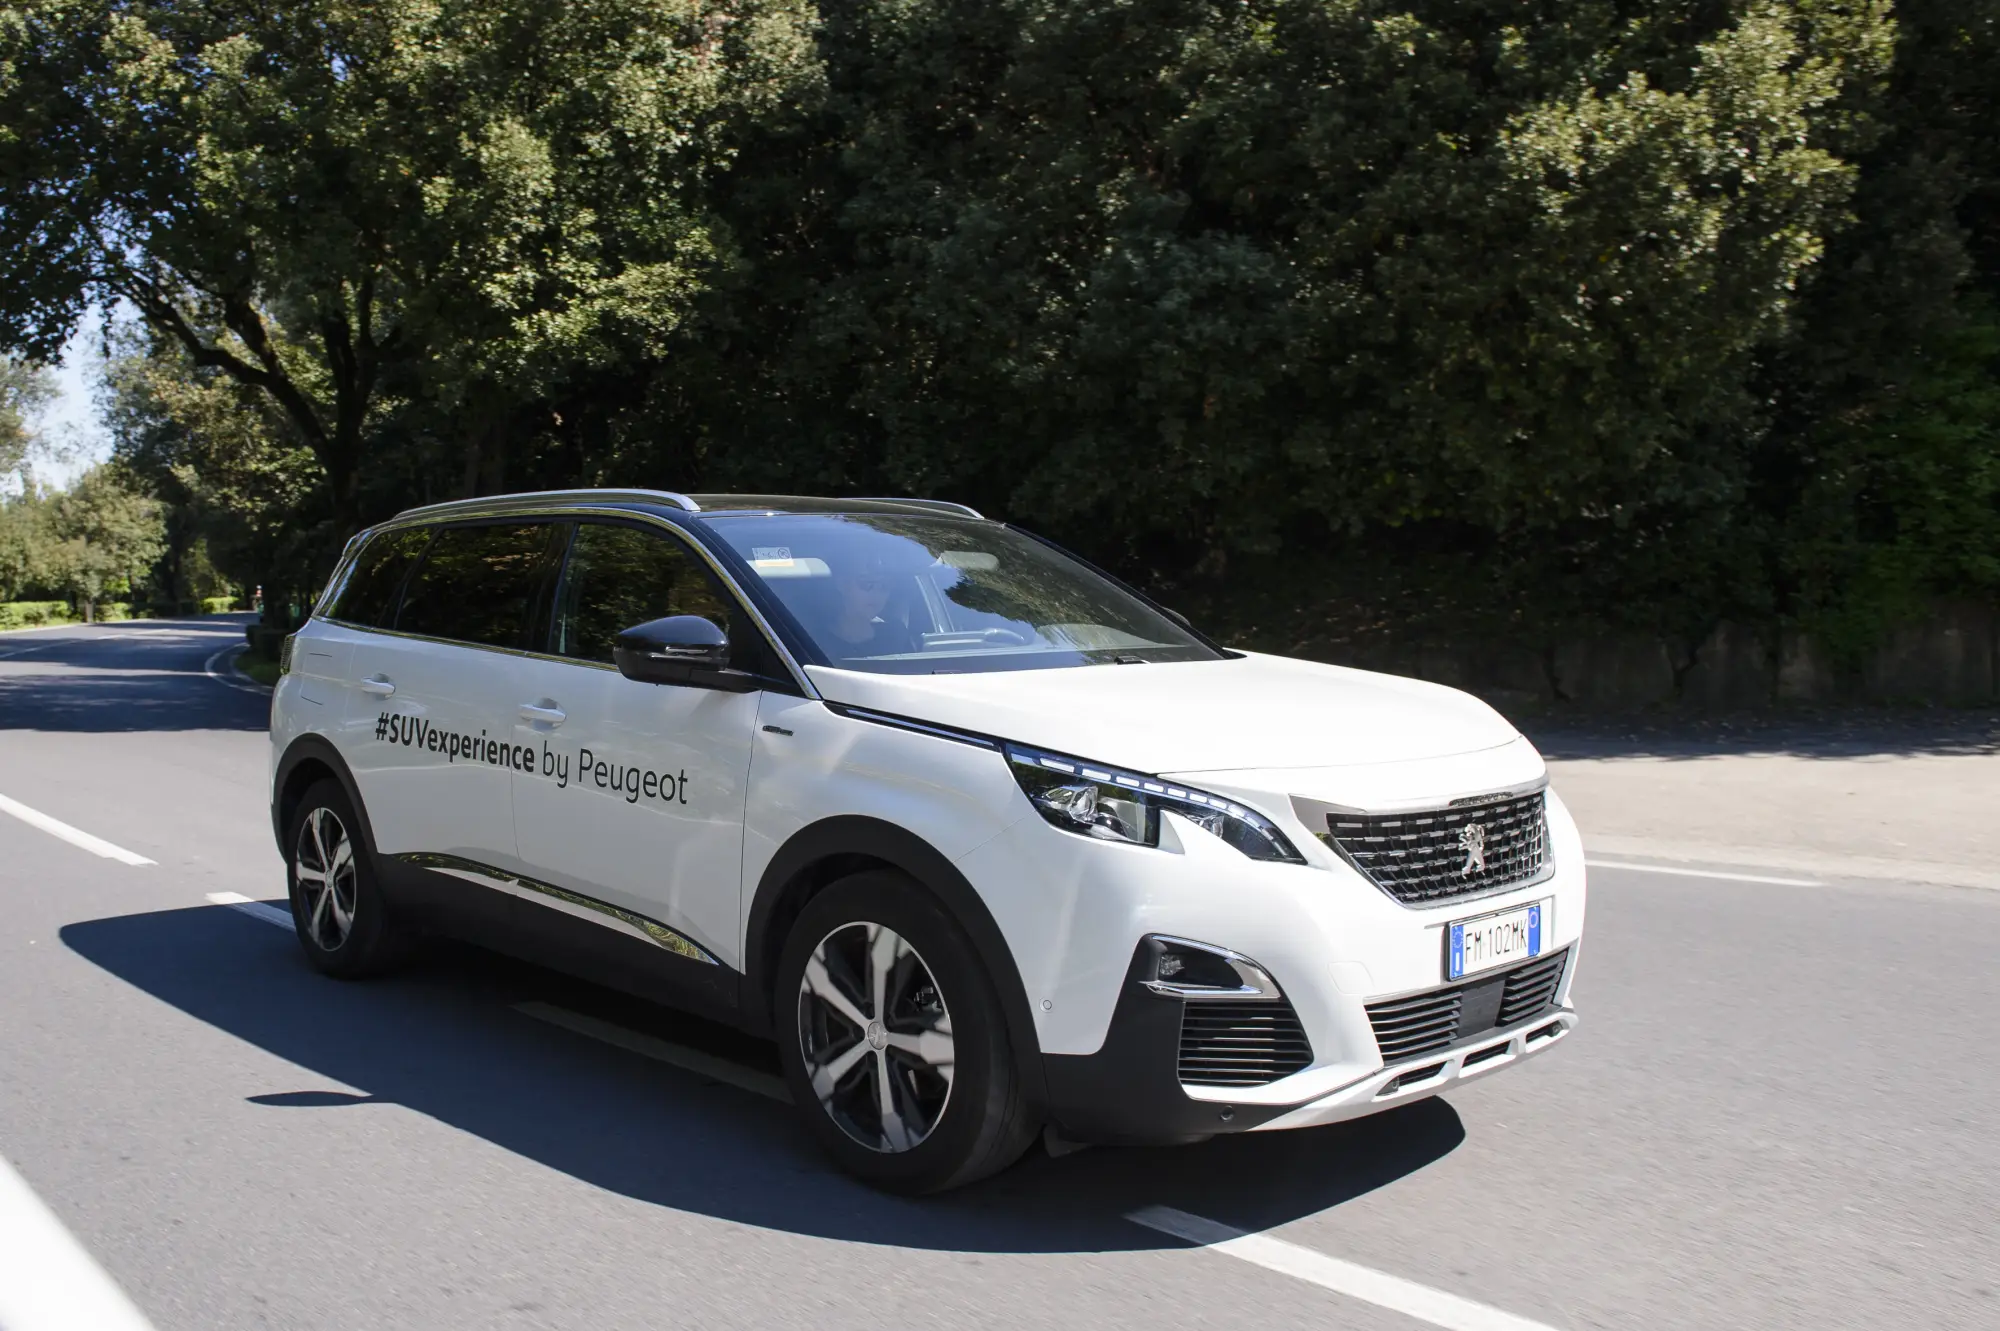 Peugeot SUV Experience Tour - 4